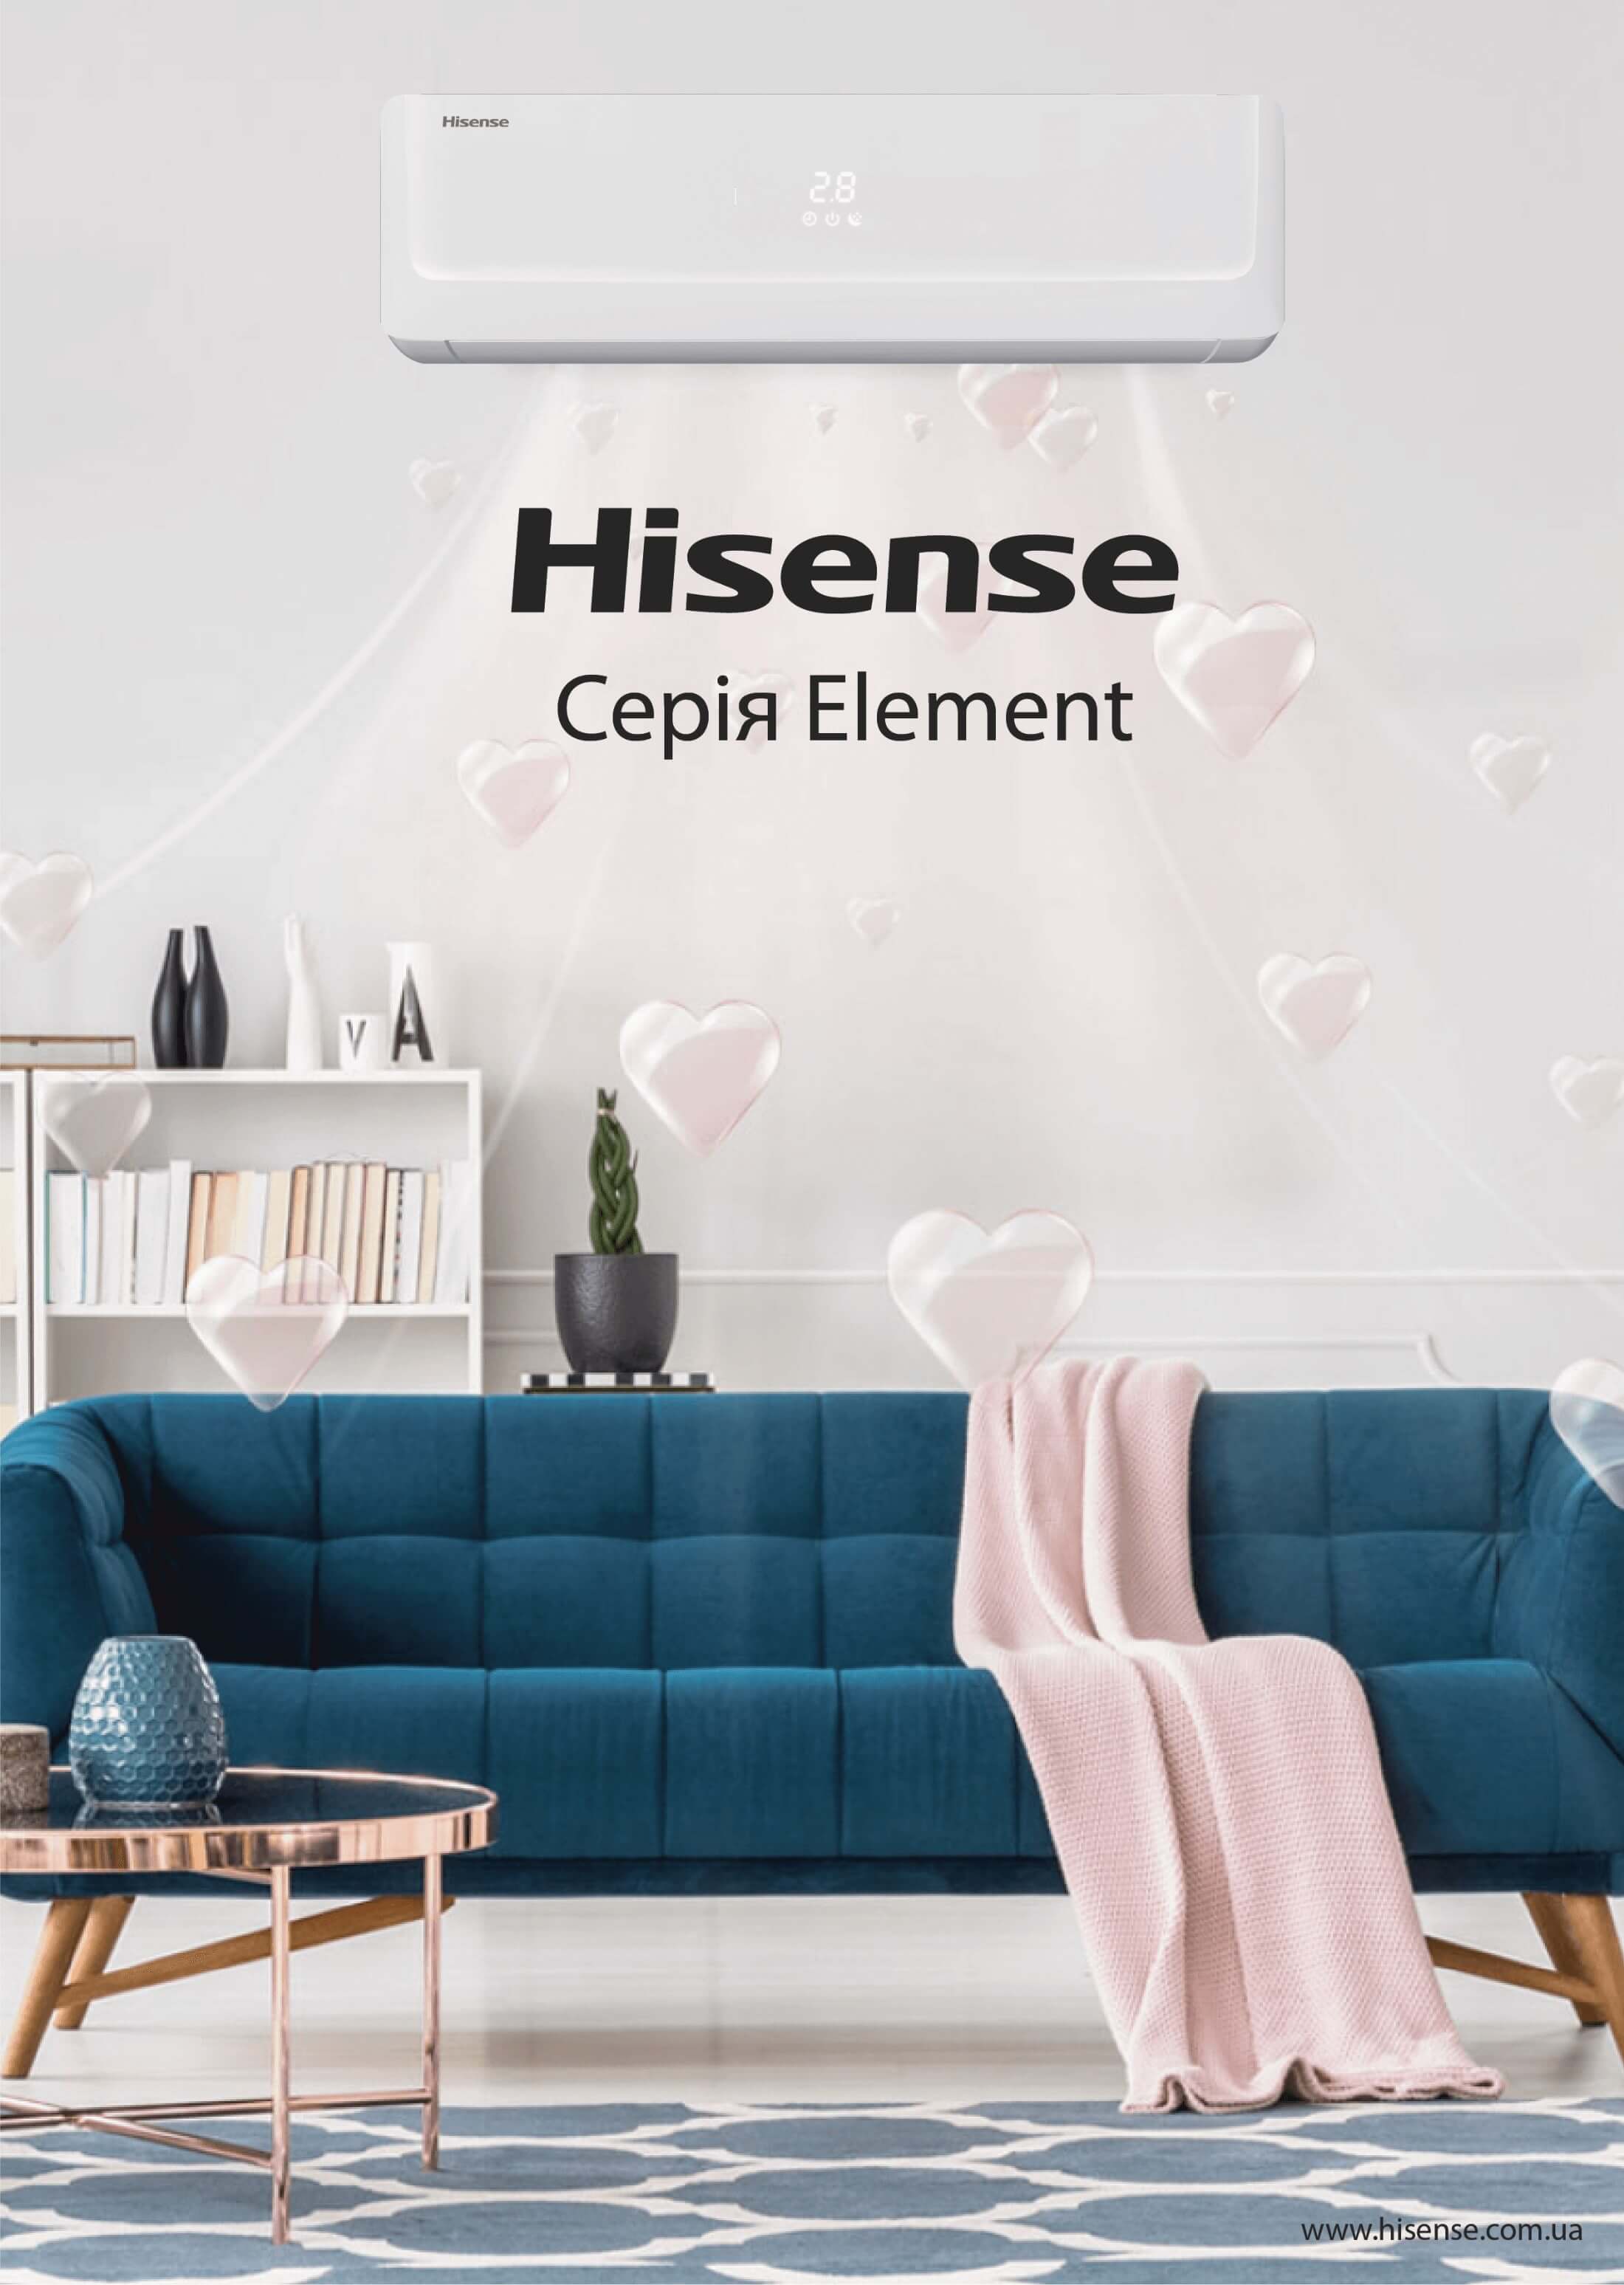 hisense/Element